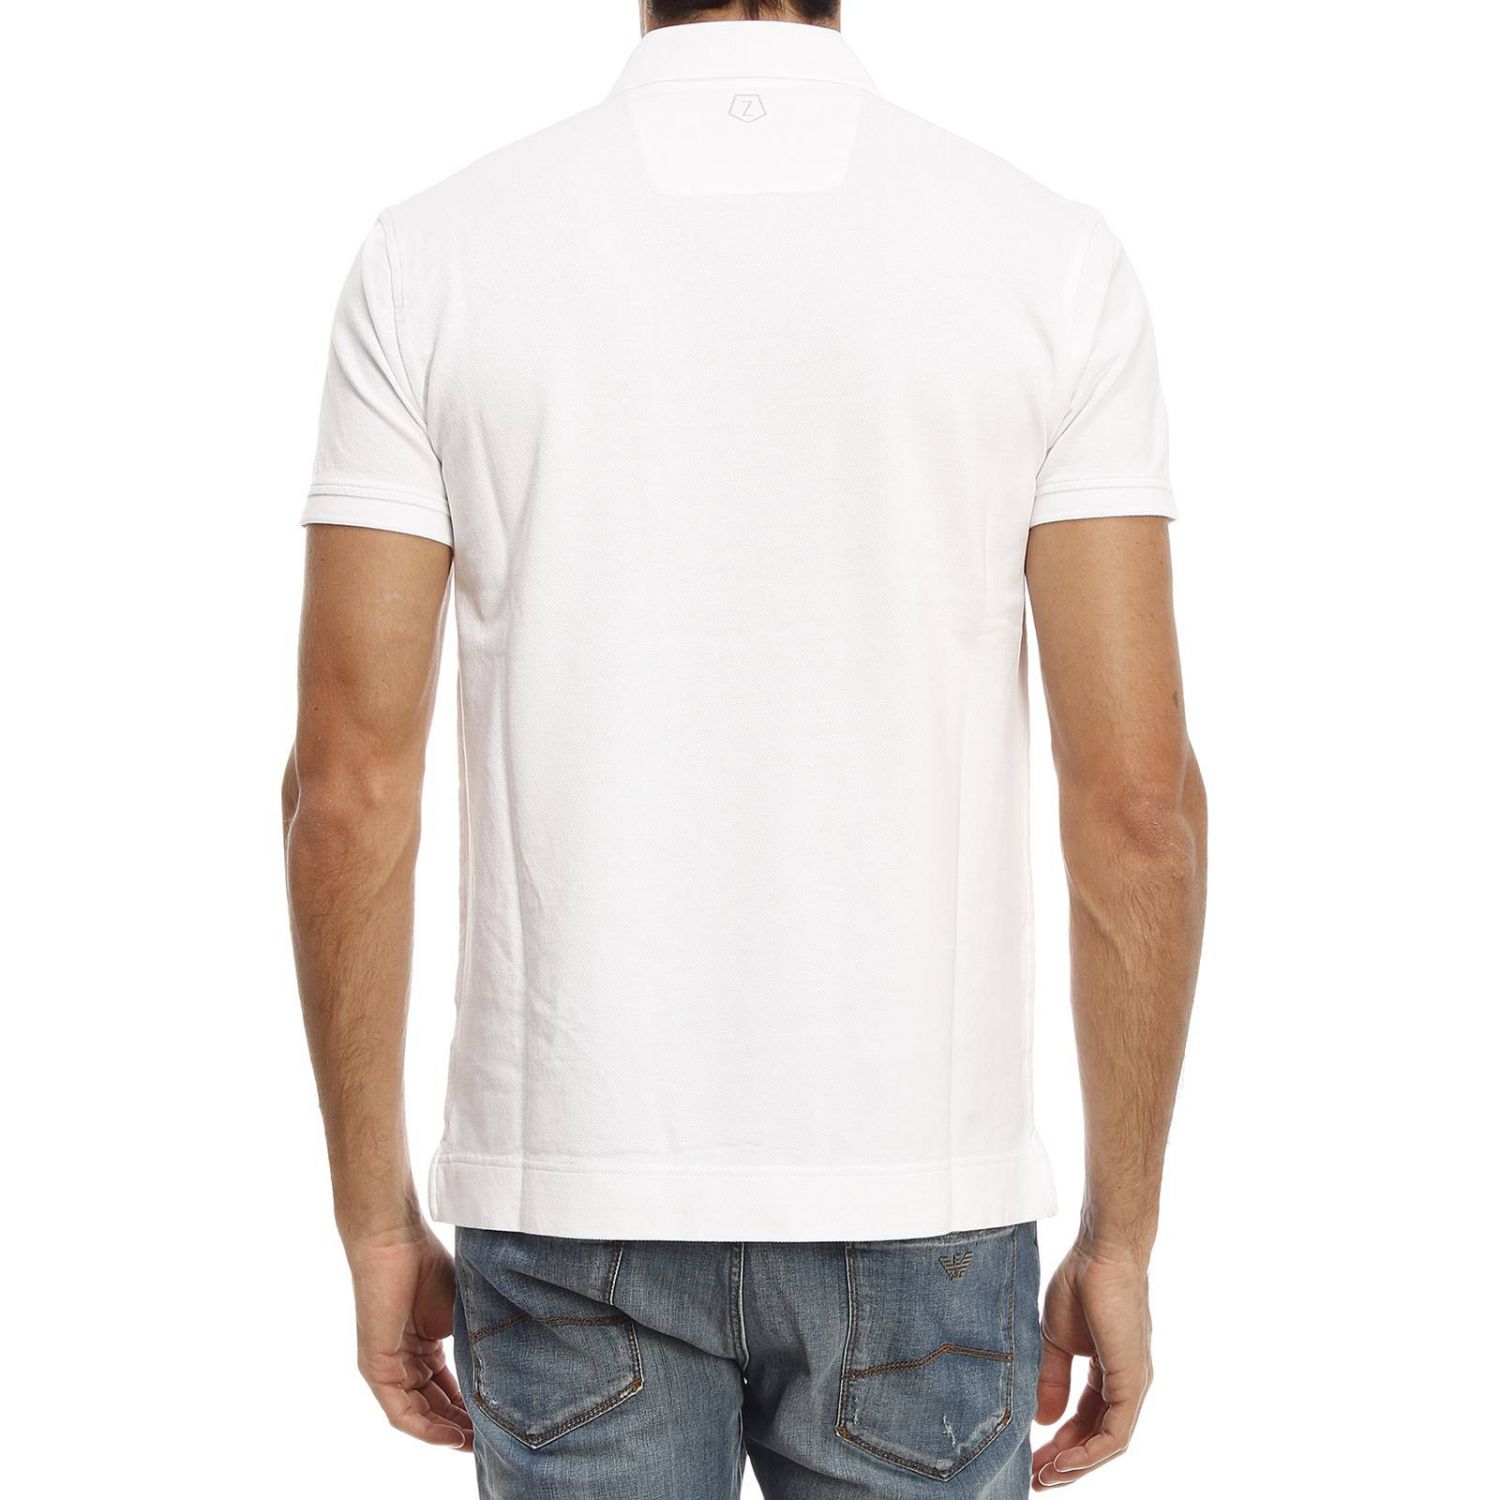 Z Zegna Outlet: | T-Shirt Z Zegna Men White | T-Shirt Z Zegna zz640 ...